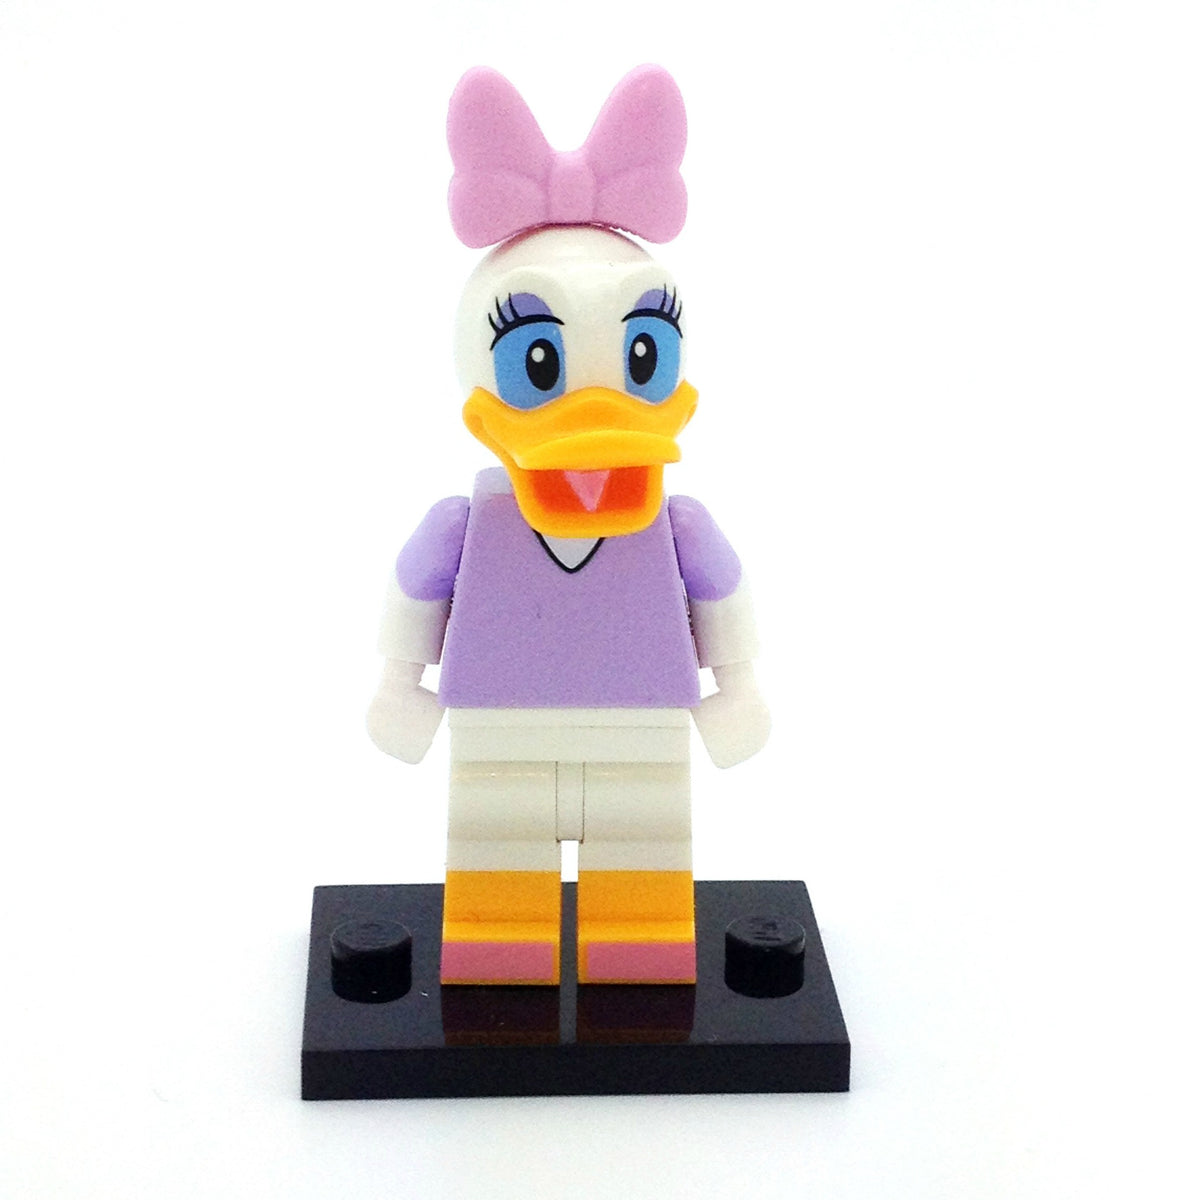 Lego Mini Figure - The Disney Series: Daisy Duck - Mindzai
